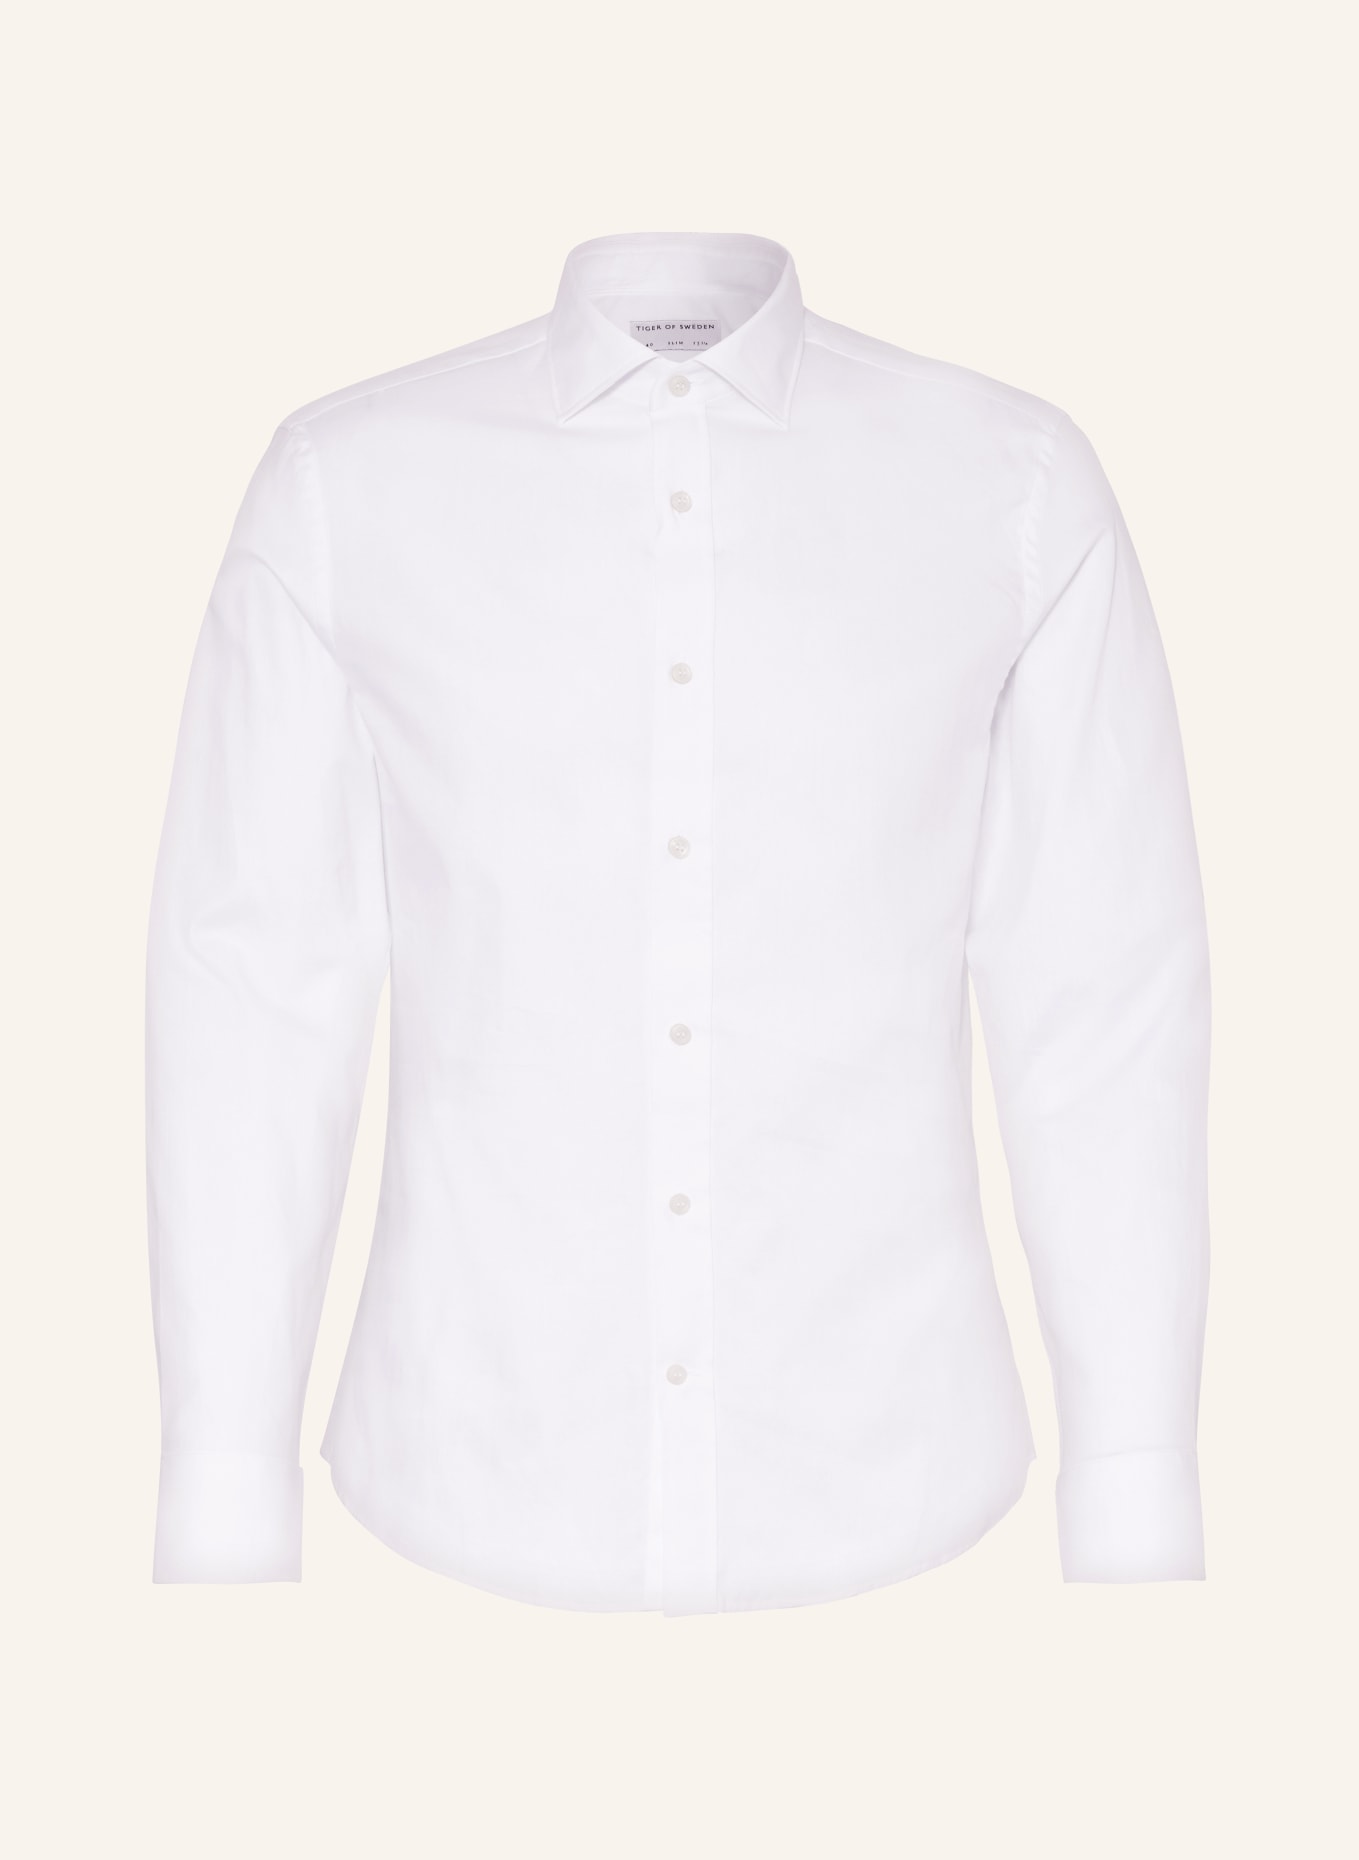 TIGER OF SWEDEN Hemd ADLEY Slim Fit, Farbe: WEISS (Bild 1)